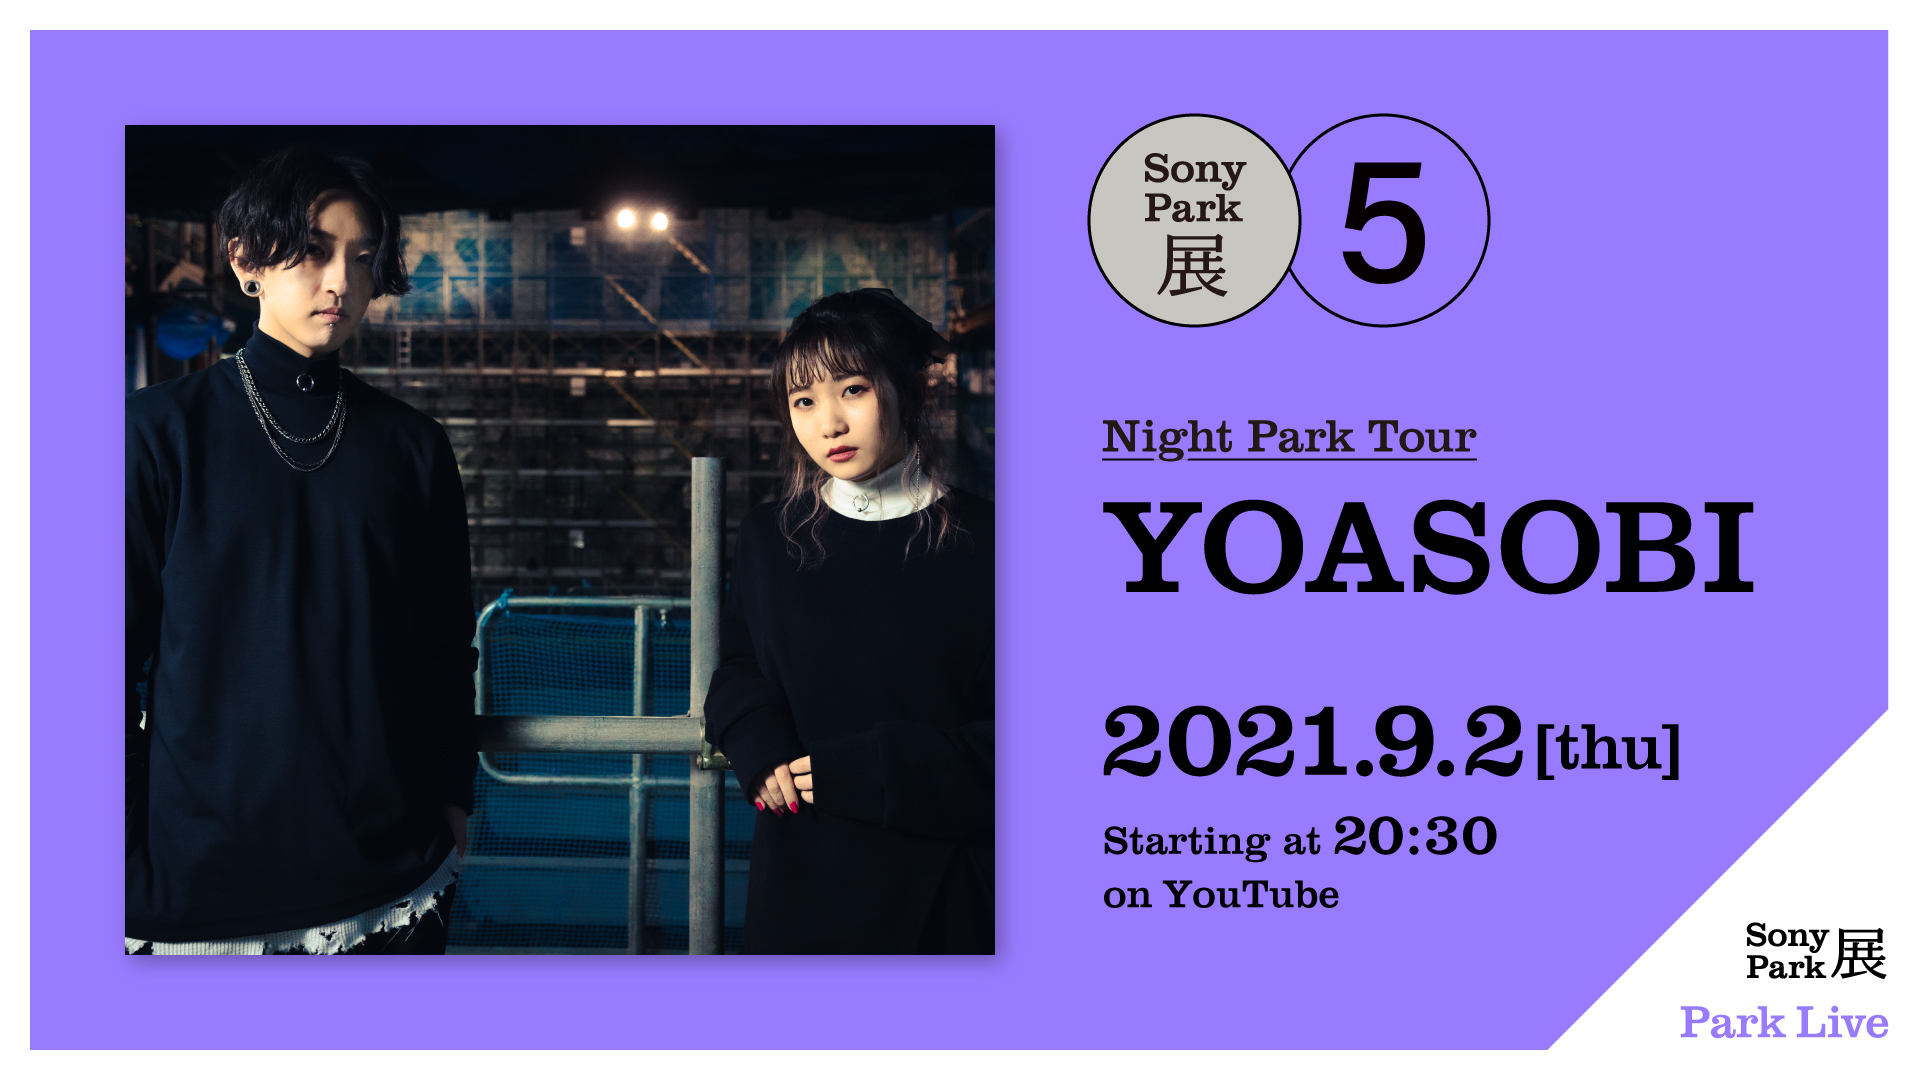 [Park Live] YOASOBI – Night Park Tour – September 2, 2021 (Thu.) 20:30 announcement visual